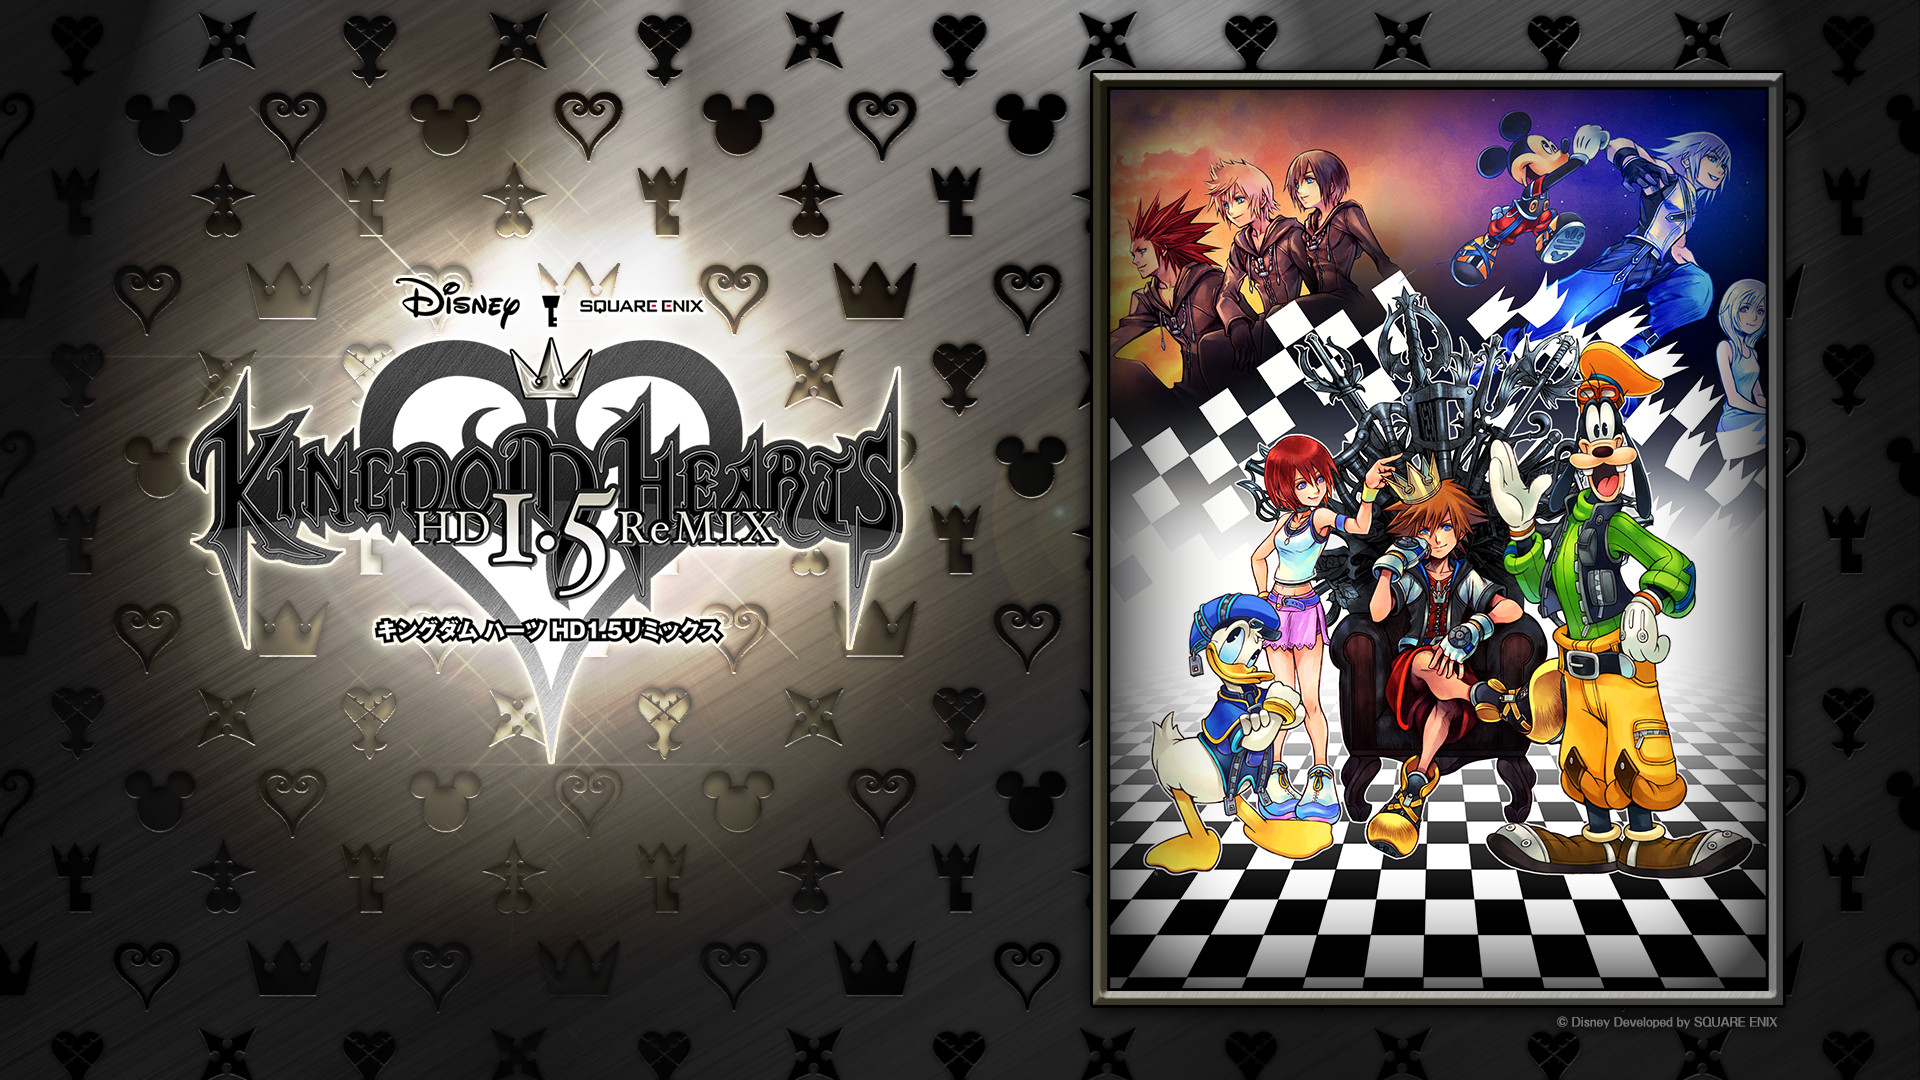 1920x1080 Oficial wallpaper Kingdom Hearts HD I.5 ReMIX Sora, Kairi, Riku, Donal,  Goofy, Mickey, Namine, Xion, Roxas and Axel | Kingdom Hearts HD I.5 ReMIX  ...